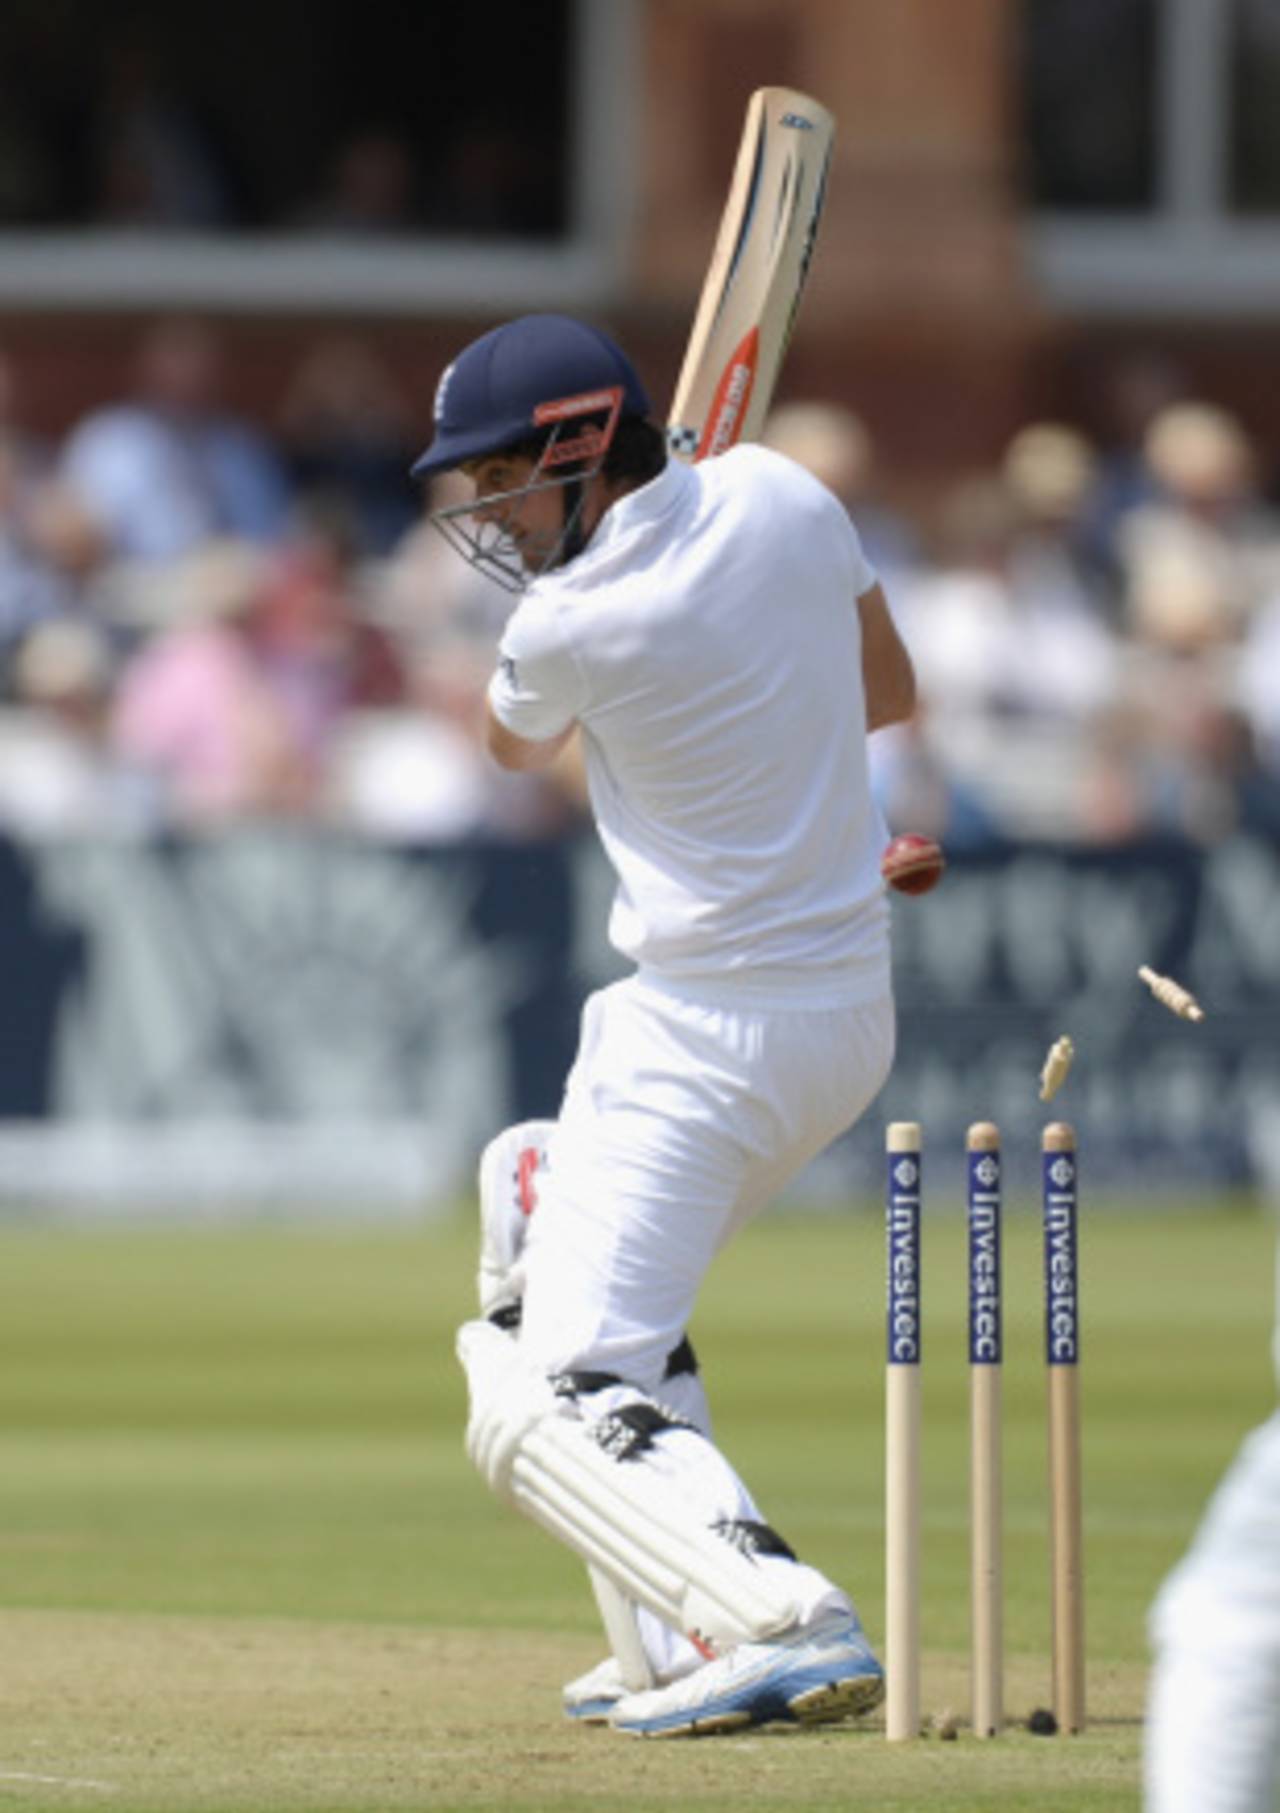 Alastair Cook chopped on against Nuwan Kulasekara, England v Sri Lanka, 1st Investec Test, Lord's, 1st day, June 12, 2014